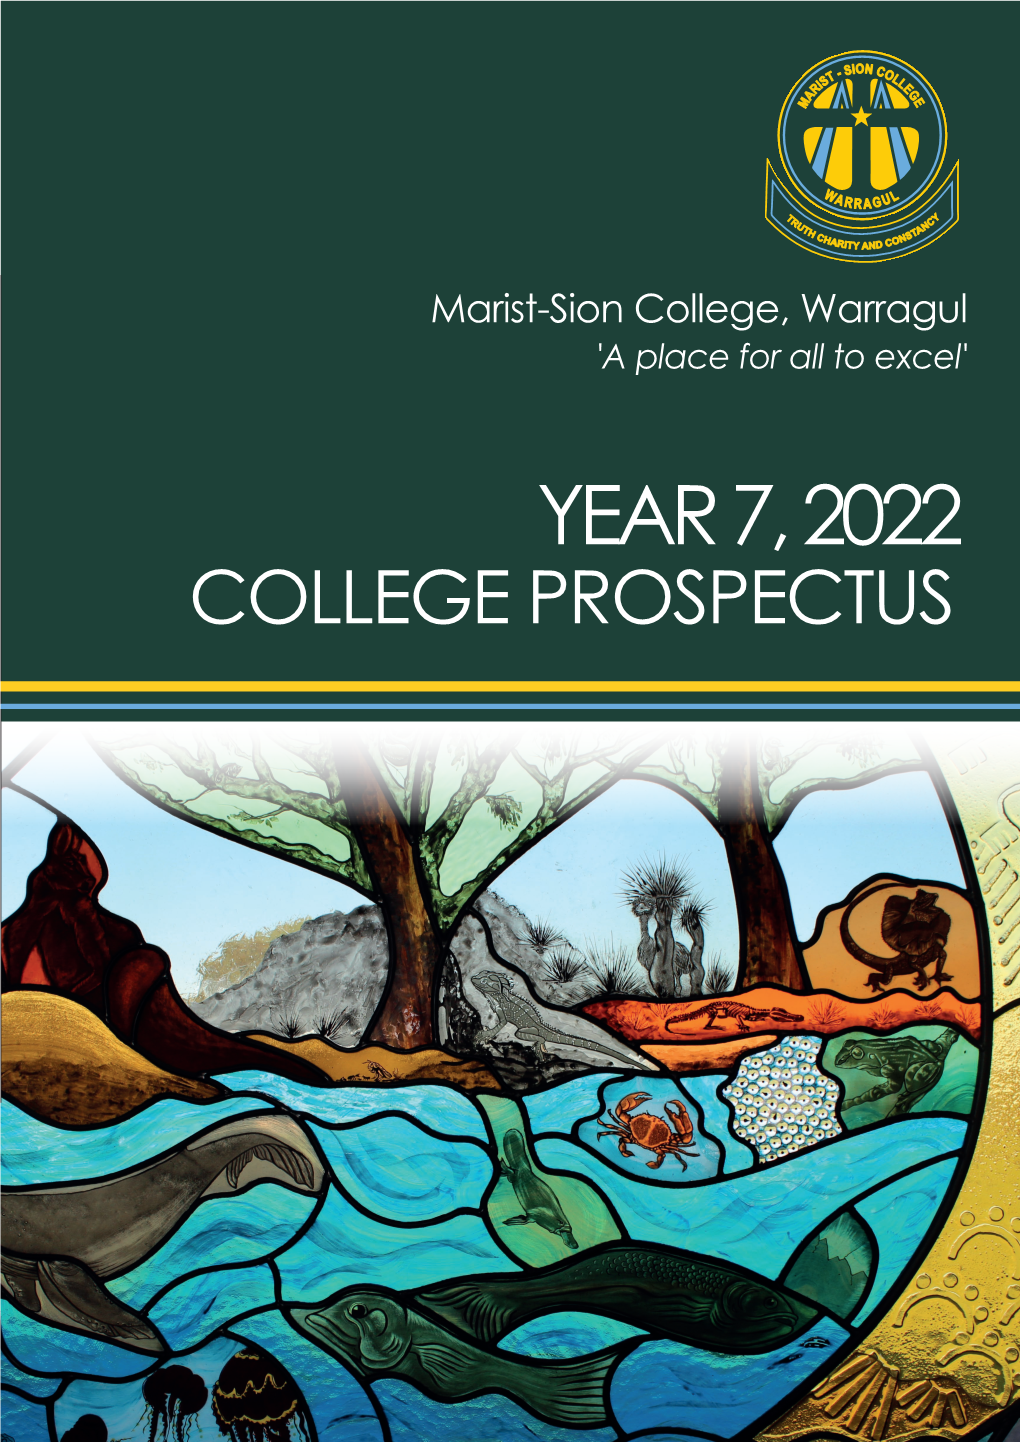 YEAR 7, 2022 COLLEGE PROSPECTUS Contents